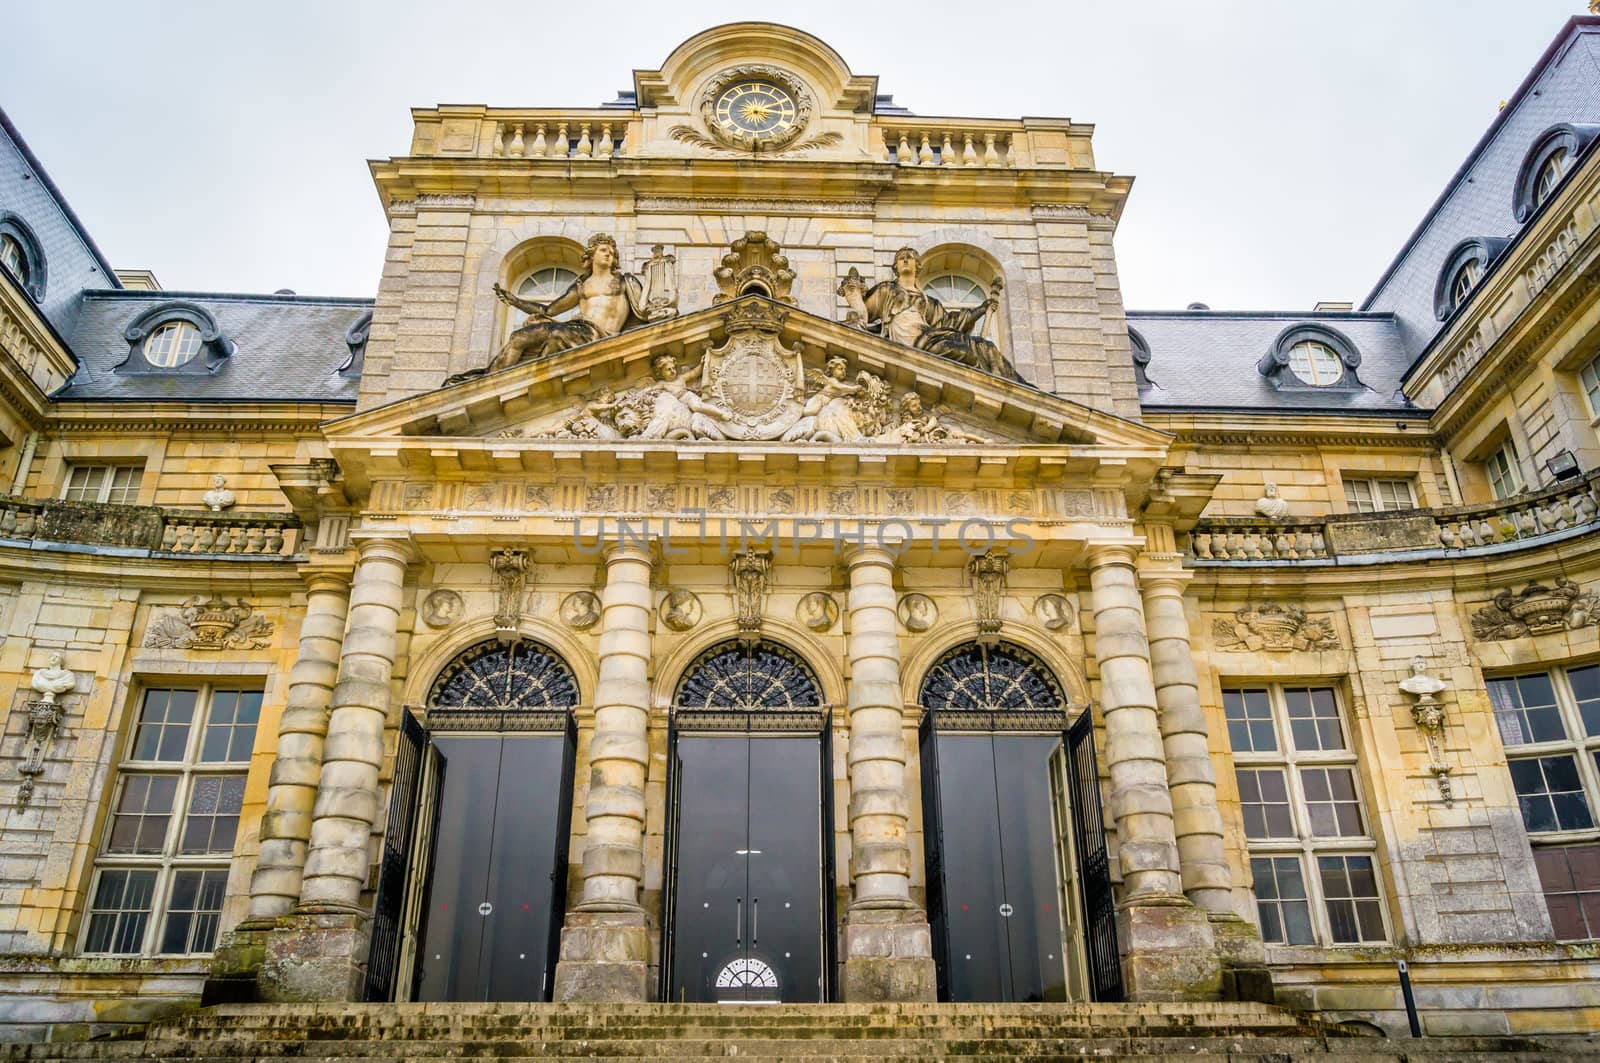 Vaux-le-vicomte castle in France and it's main entrance